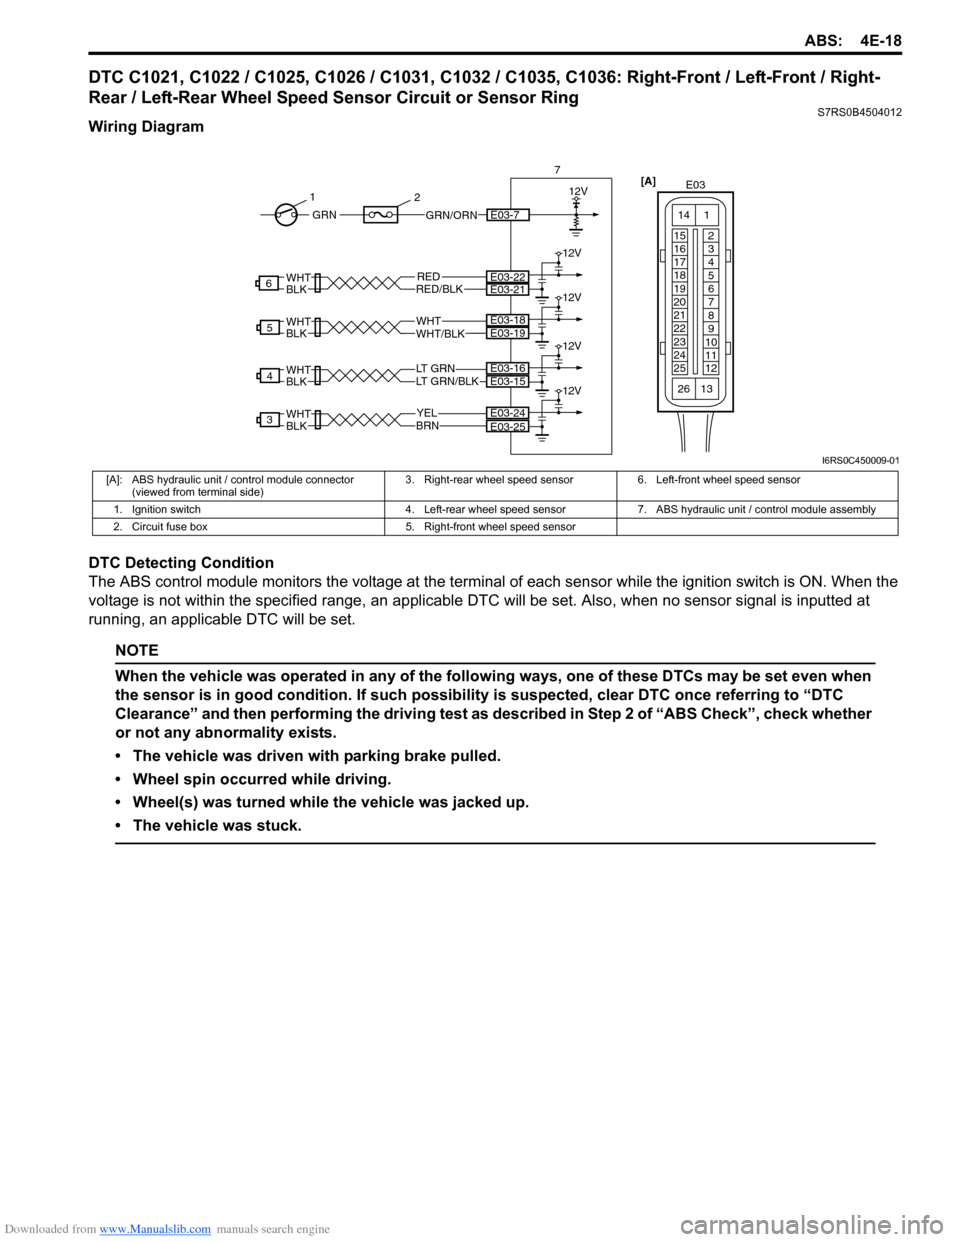 SUZUKI SWIFT 2006 2.G Service User Guide Downloaded from www.Manualslib.com manuals search engine ABS: 4E-18
DTC C1021, C1022 / C1025, C1026 / C1031, C1032 / C1035, C1036: Right-Front / Left-Front / Right-
Rear / Left-Rear Wheel Speed Sensor